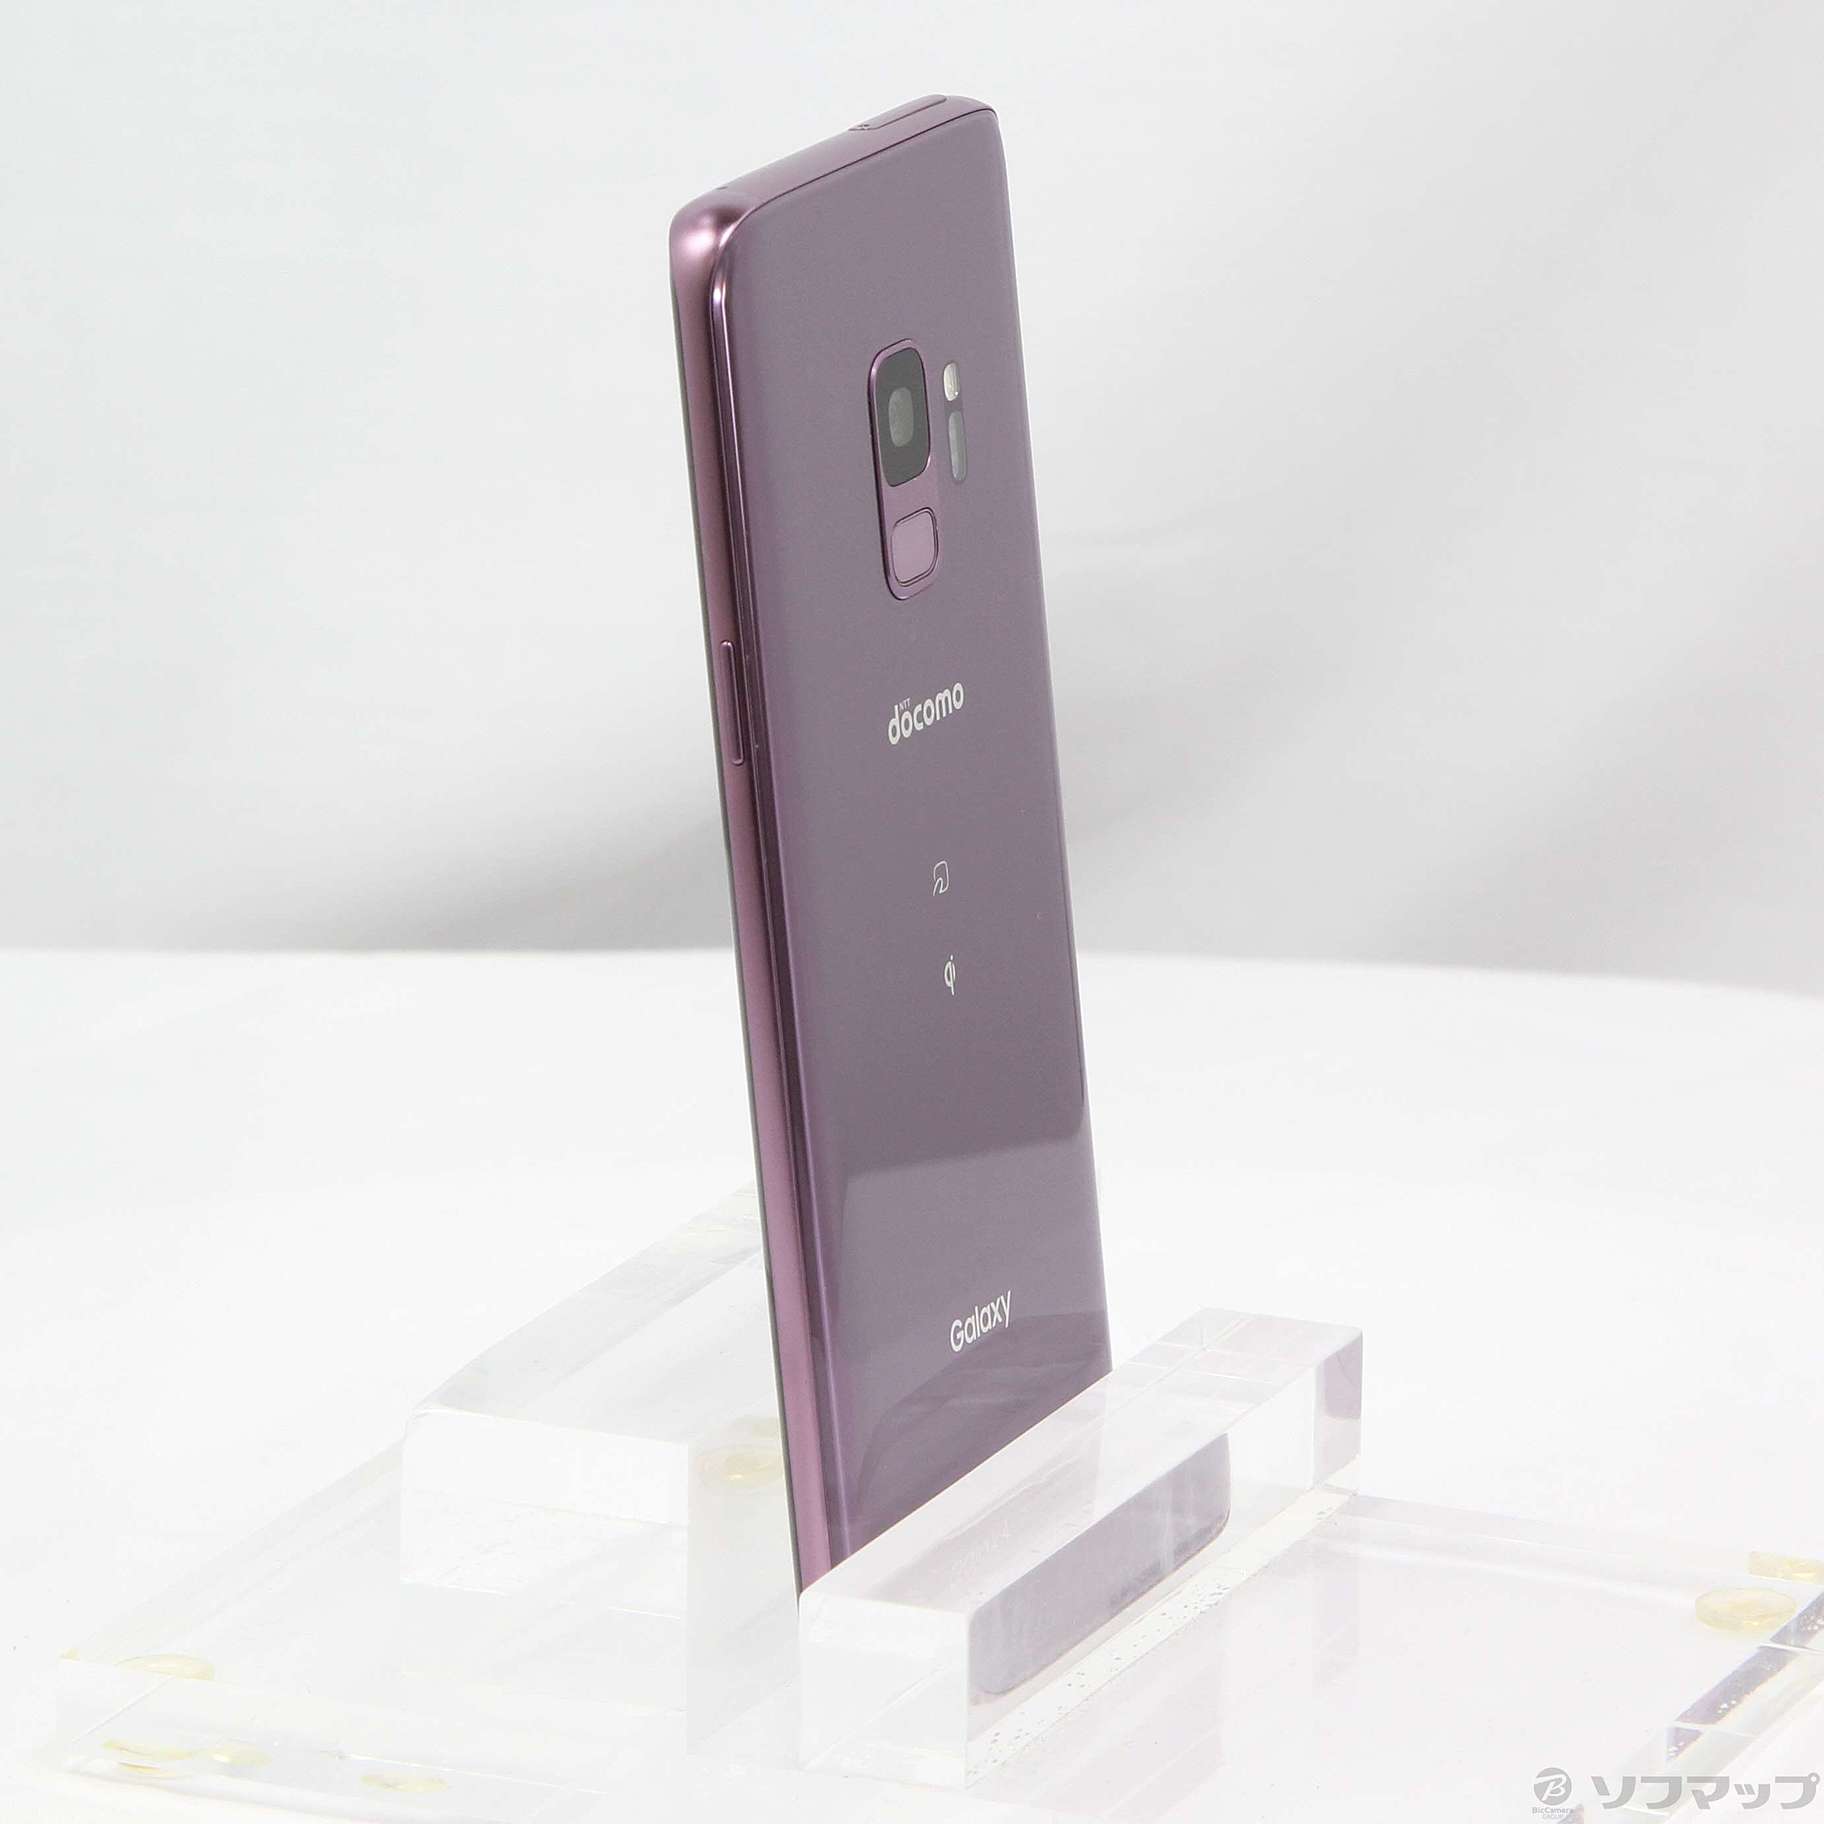 Galaxy S9 Lilac Purple 64 GB docomo